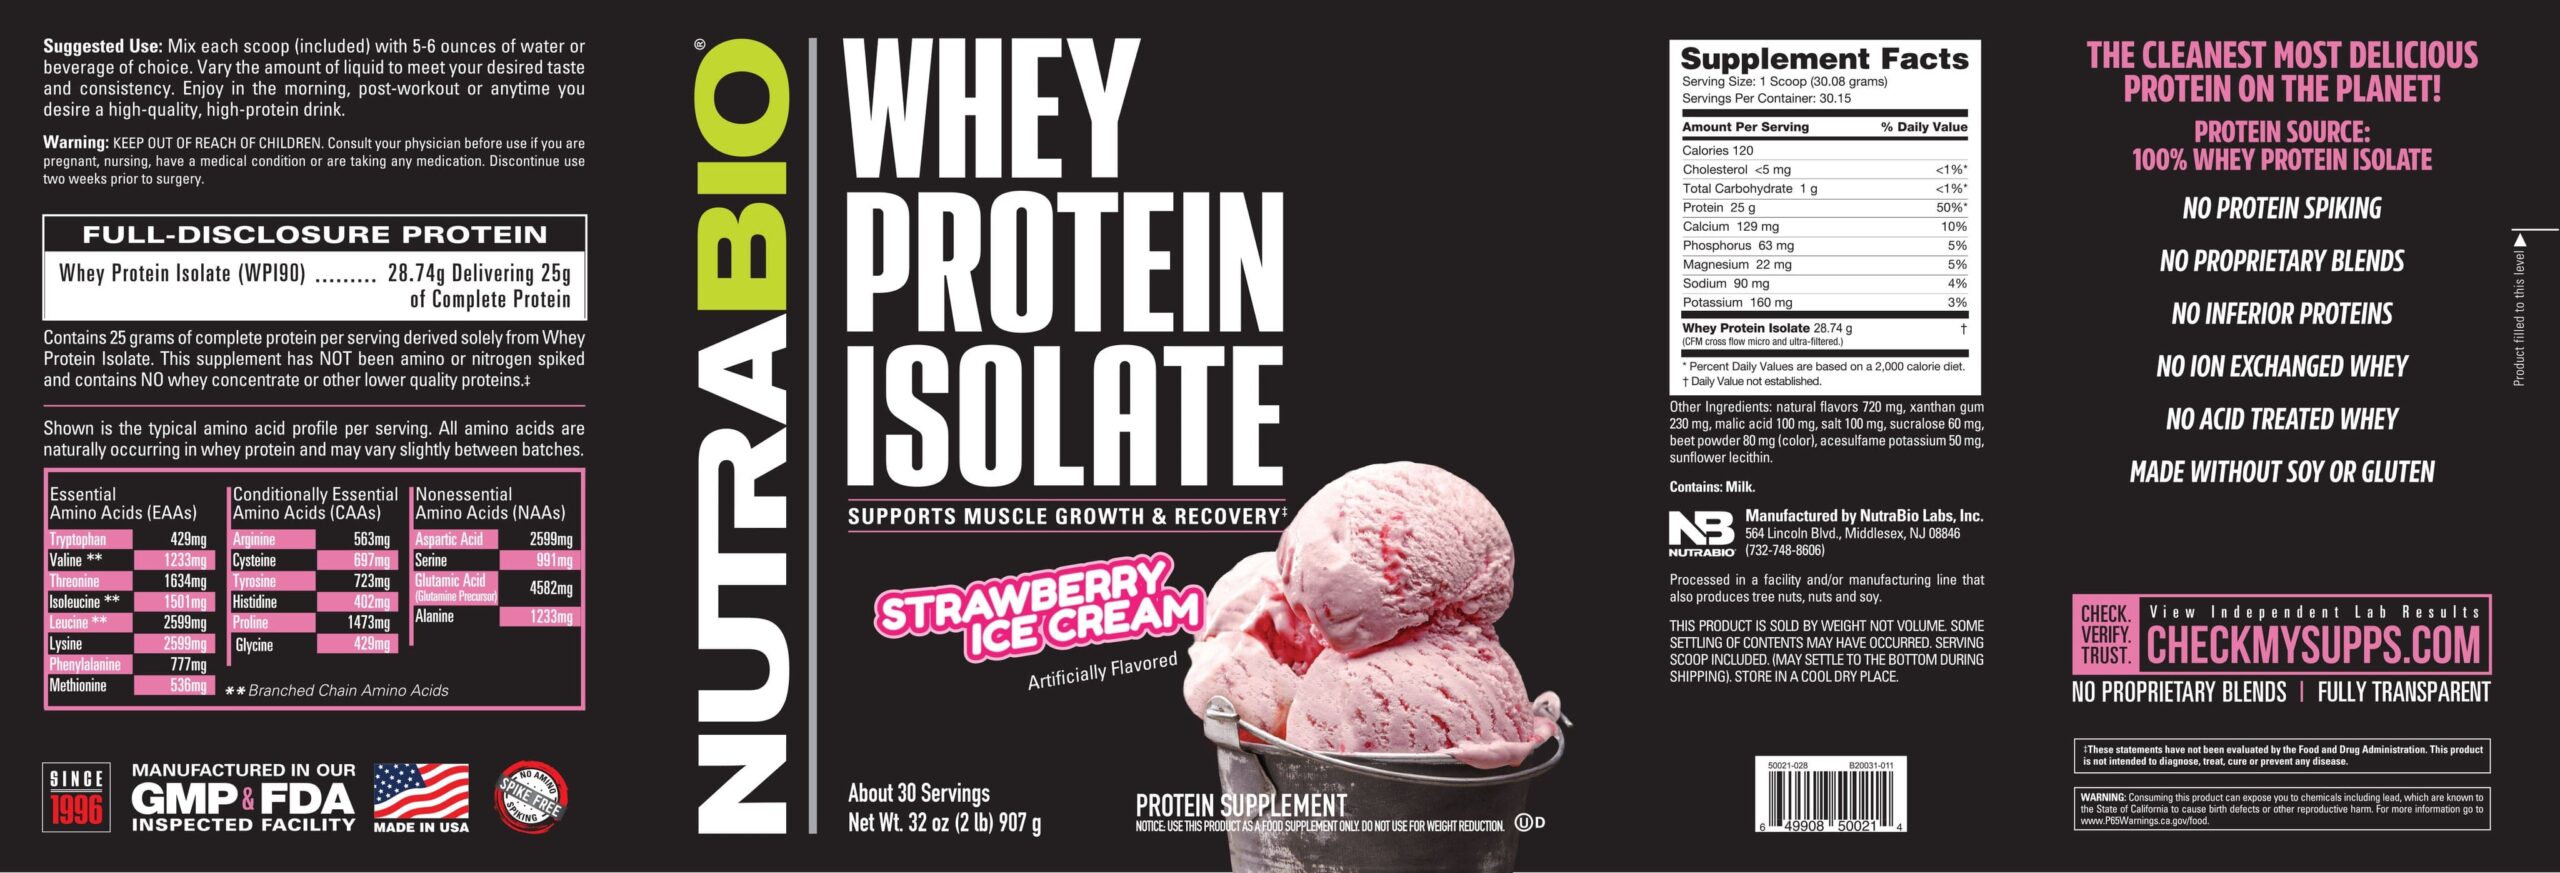 Whey-Protein-Isolate-Strawberry-Ice-Cream-label-en-scaled-1.jpg